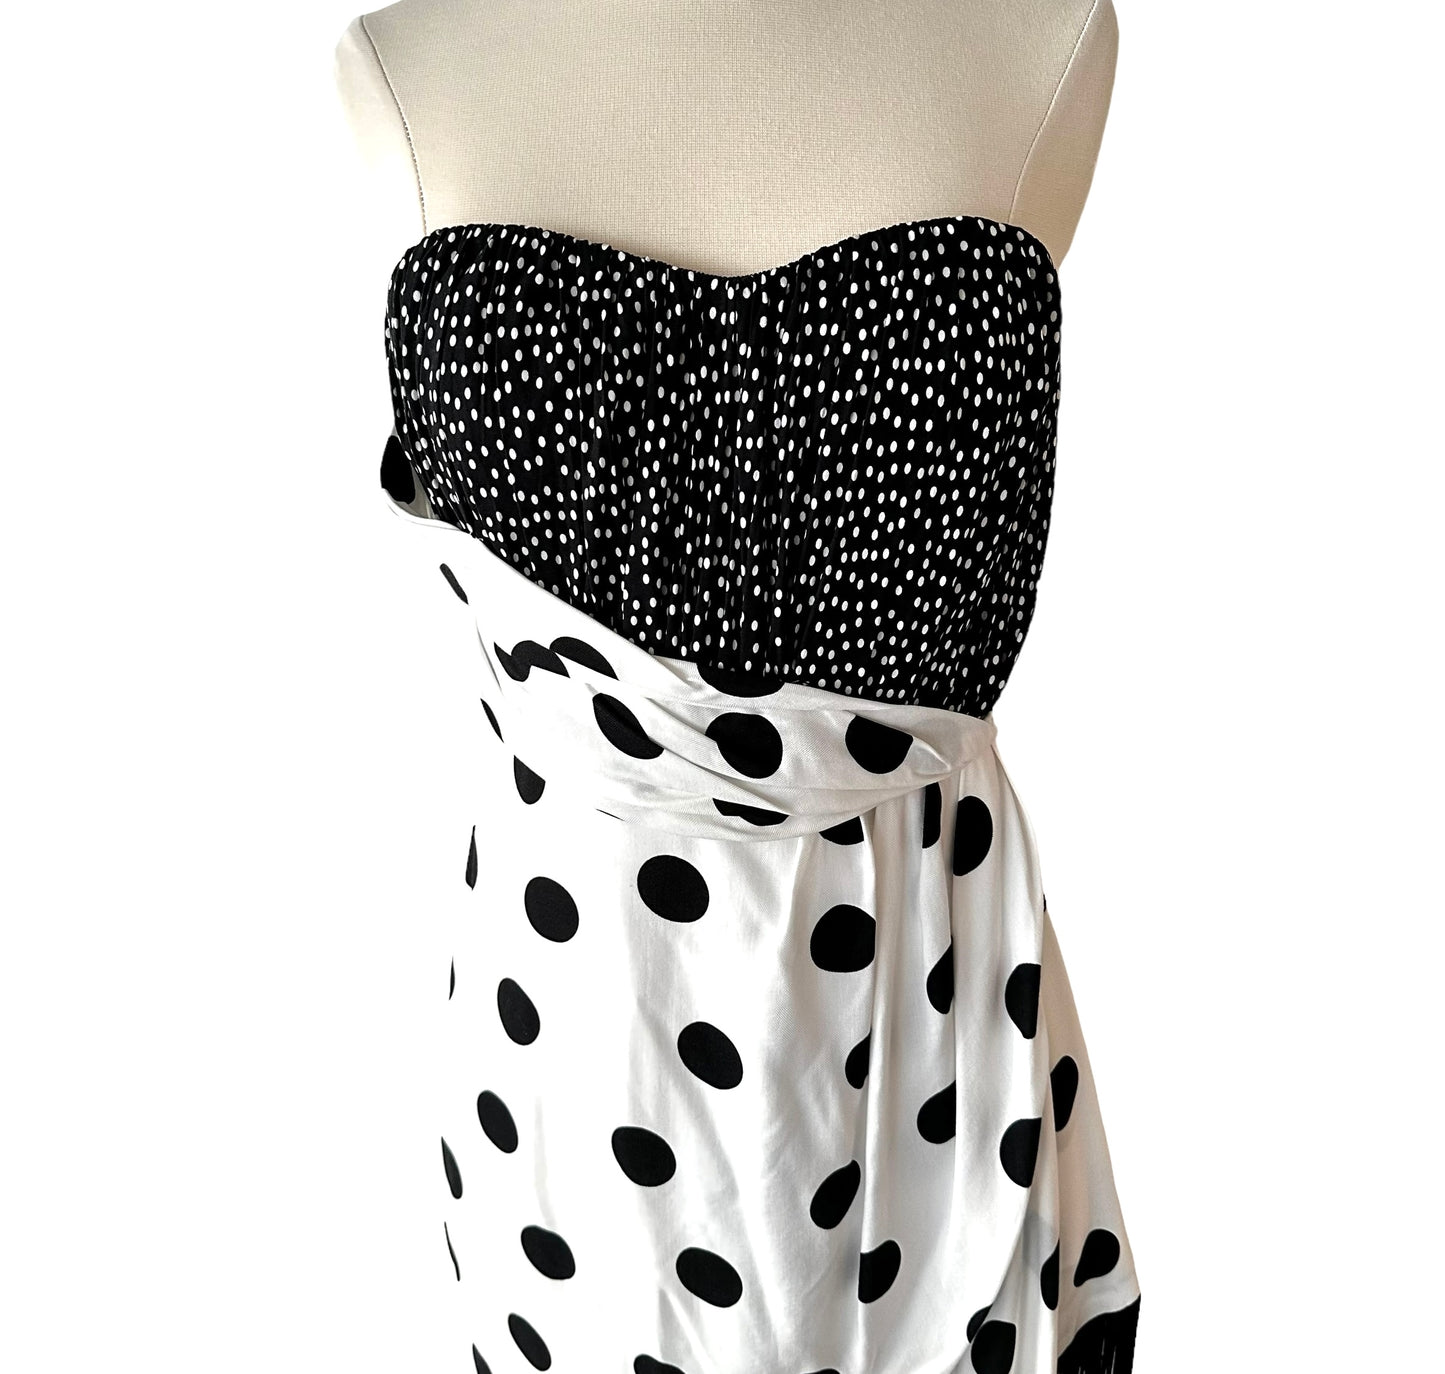 Strapless Black and White Polka Dot Dress - M